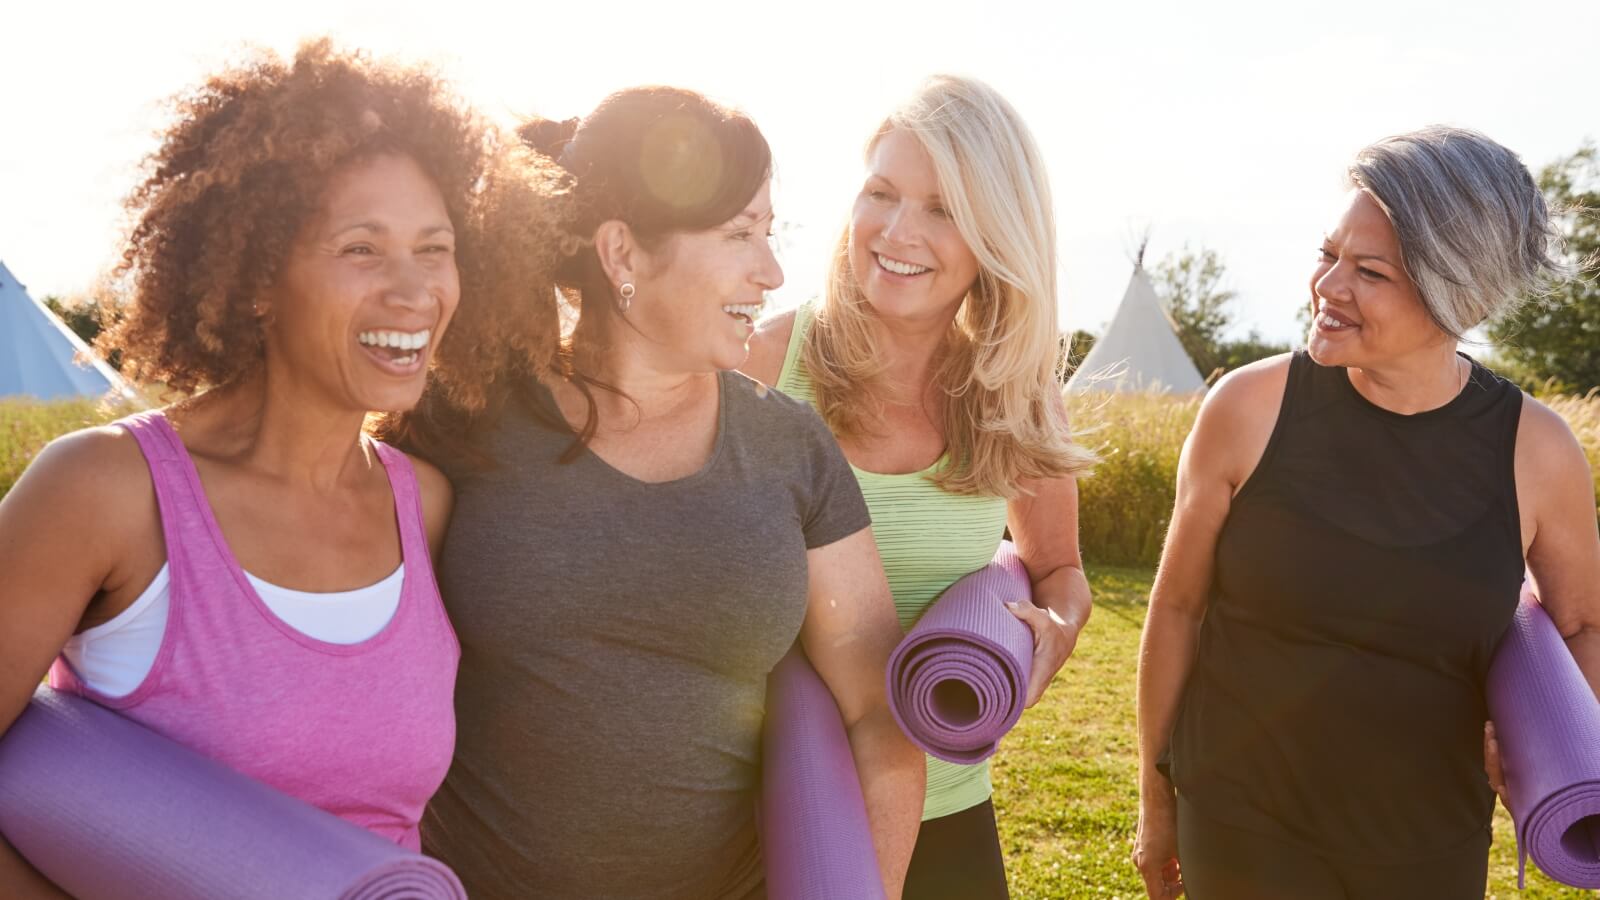 Women's plant-based diet improve menopausal symptoms